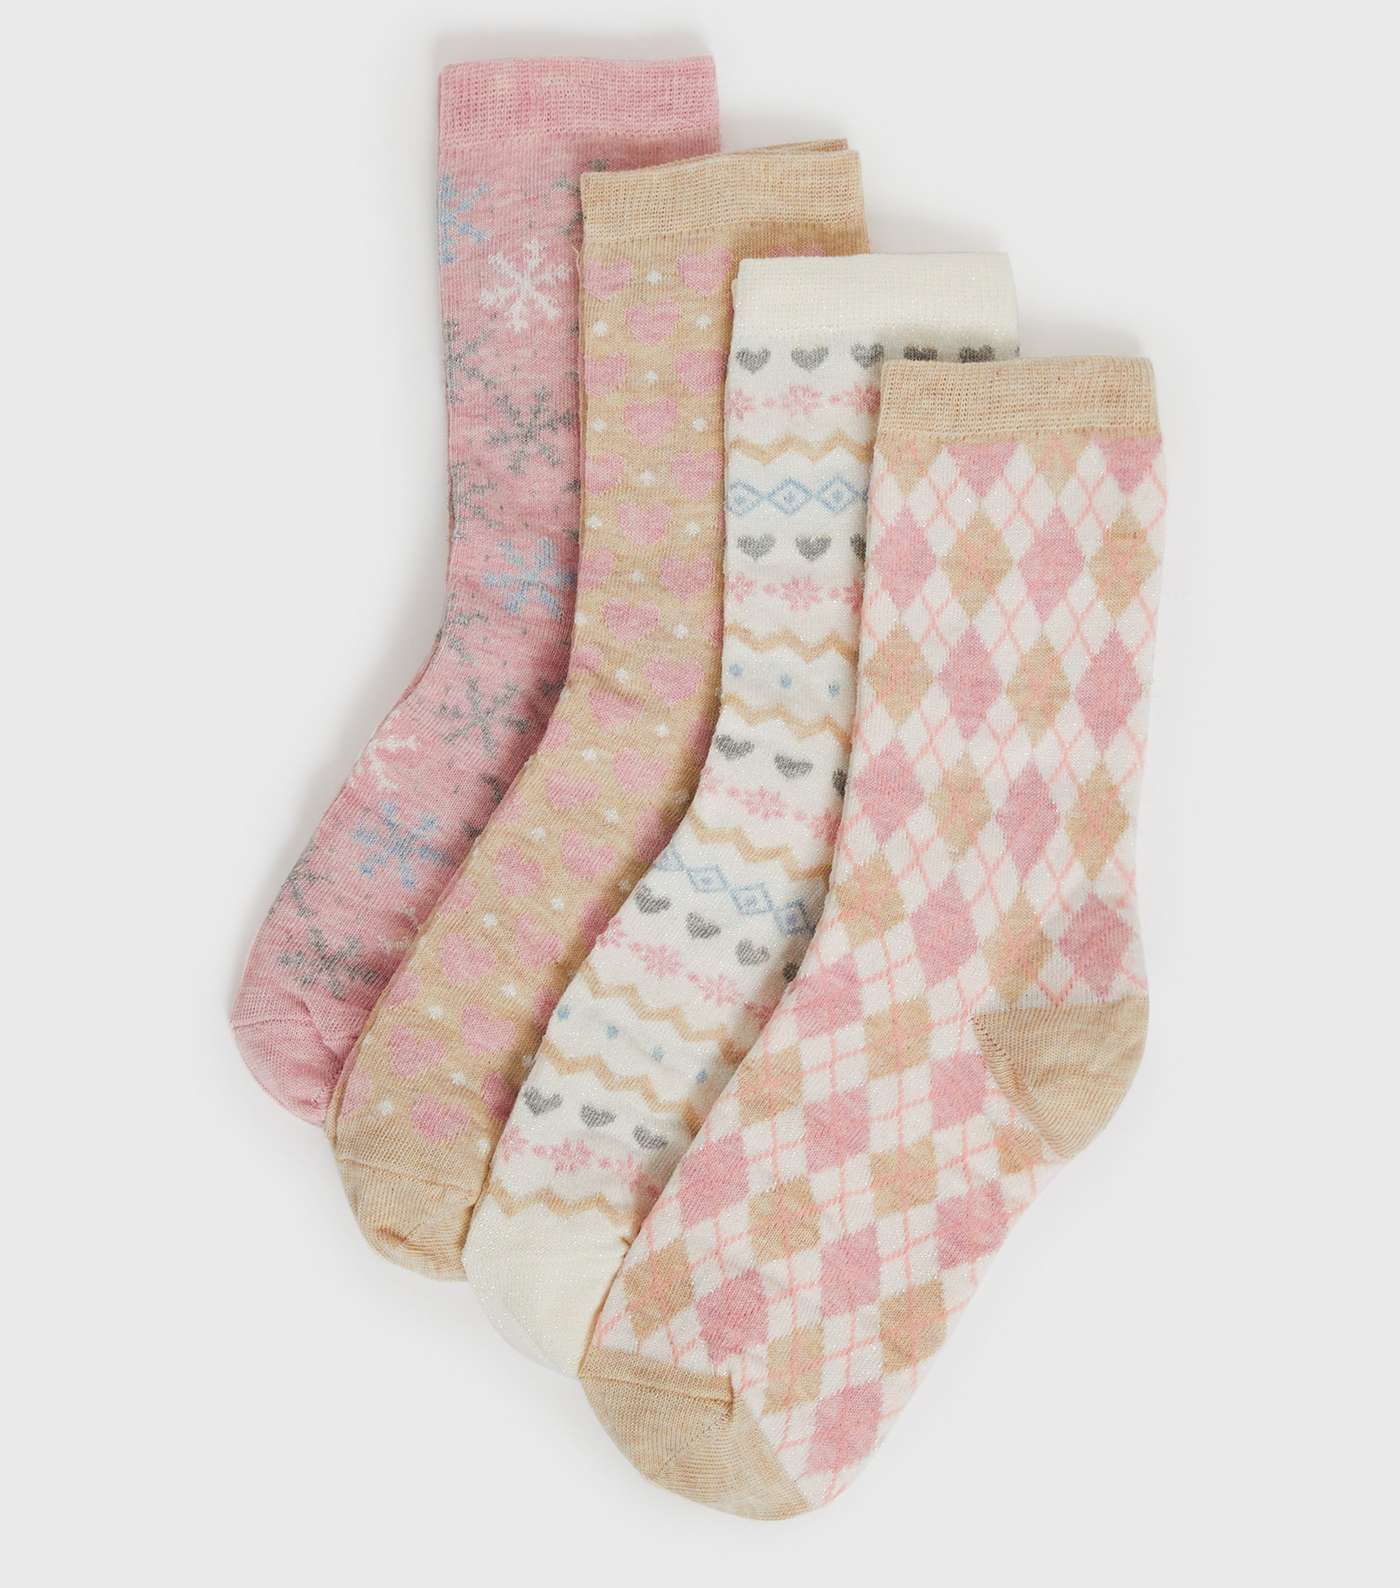 4 Pack White Pink and Camel Argyle Socks Image 2